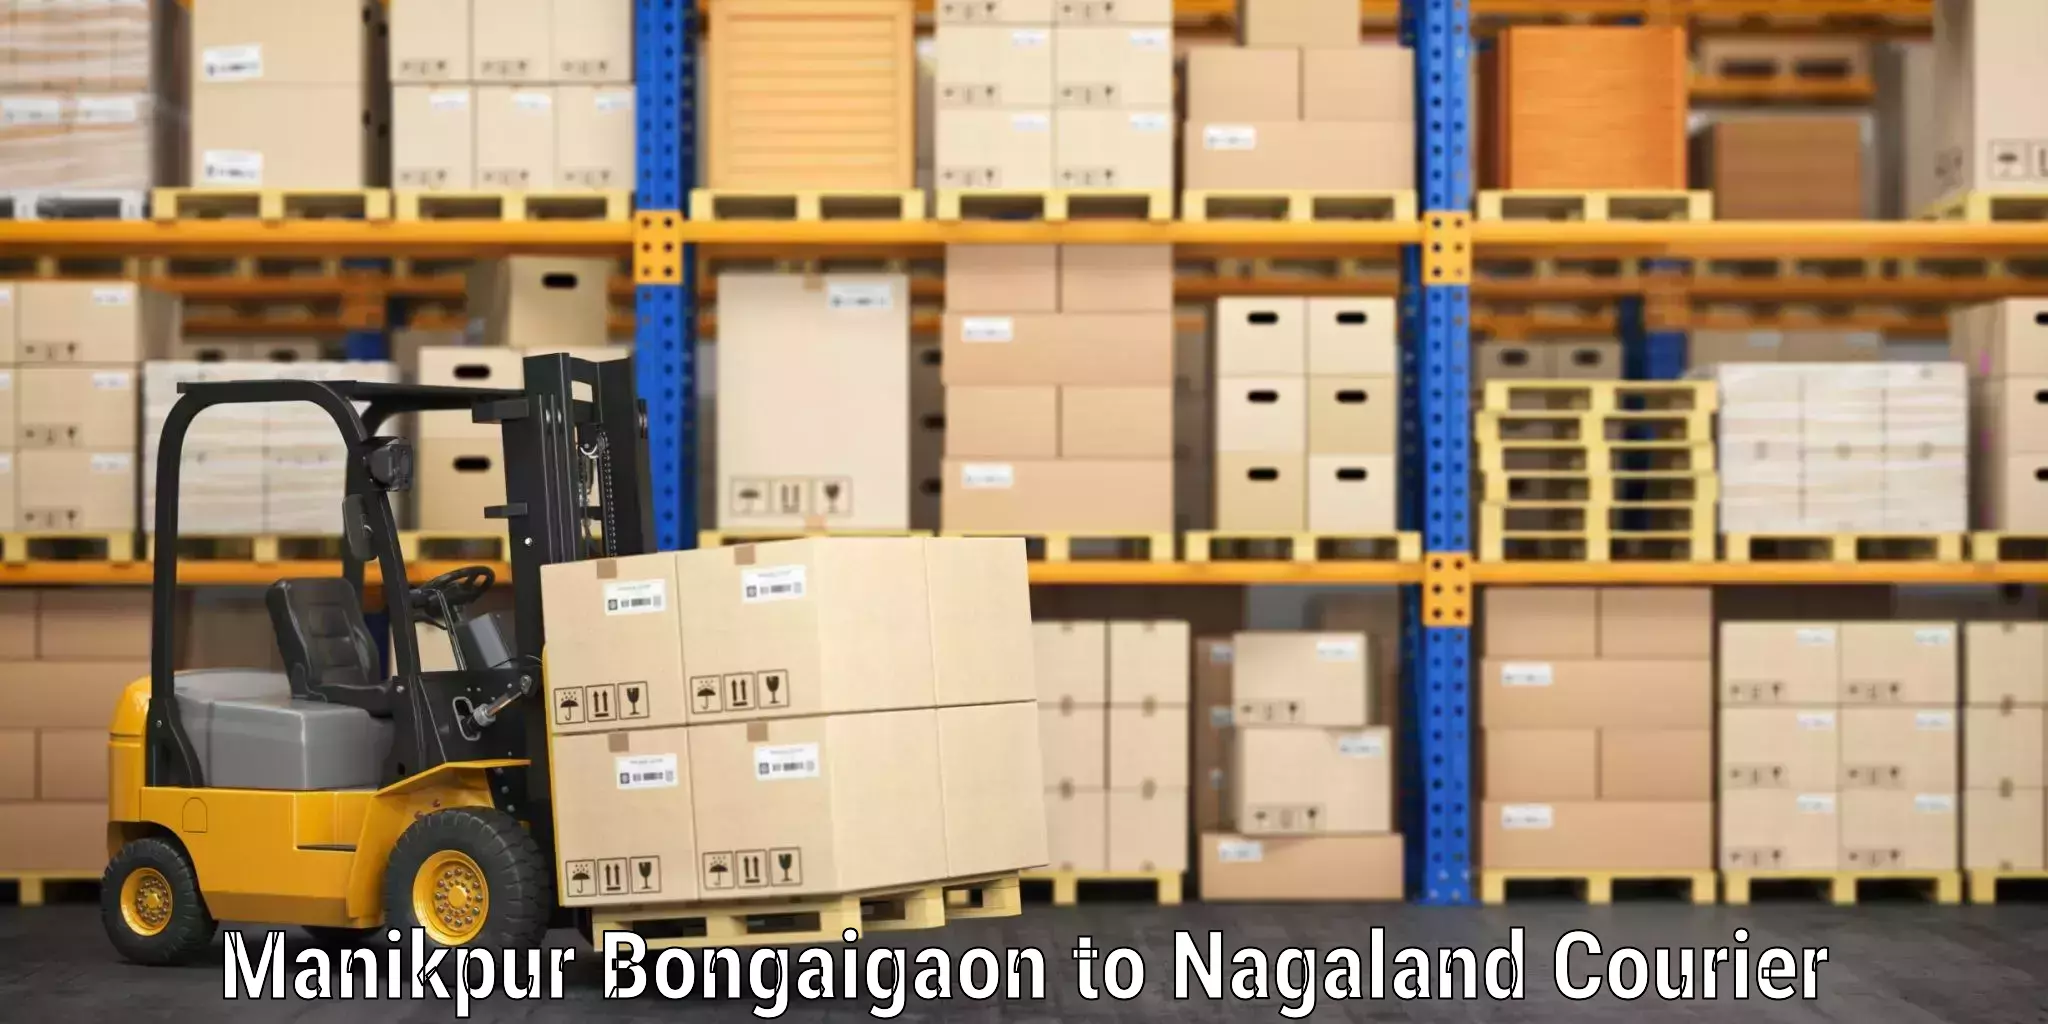 Baggage transport professionals Manikpur Bongaigaon to Mon